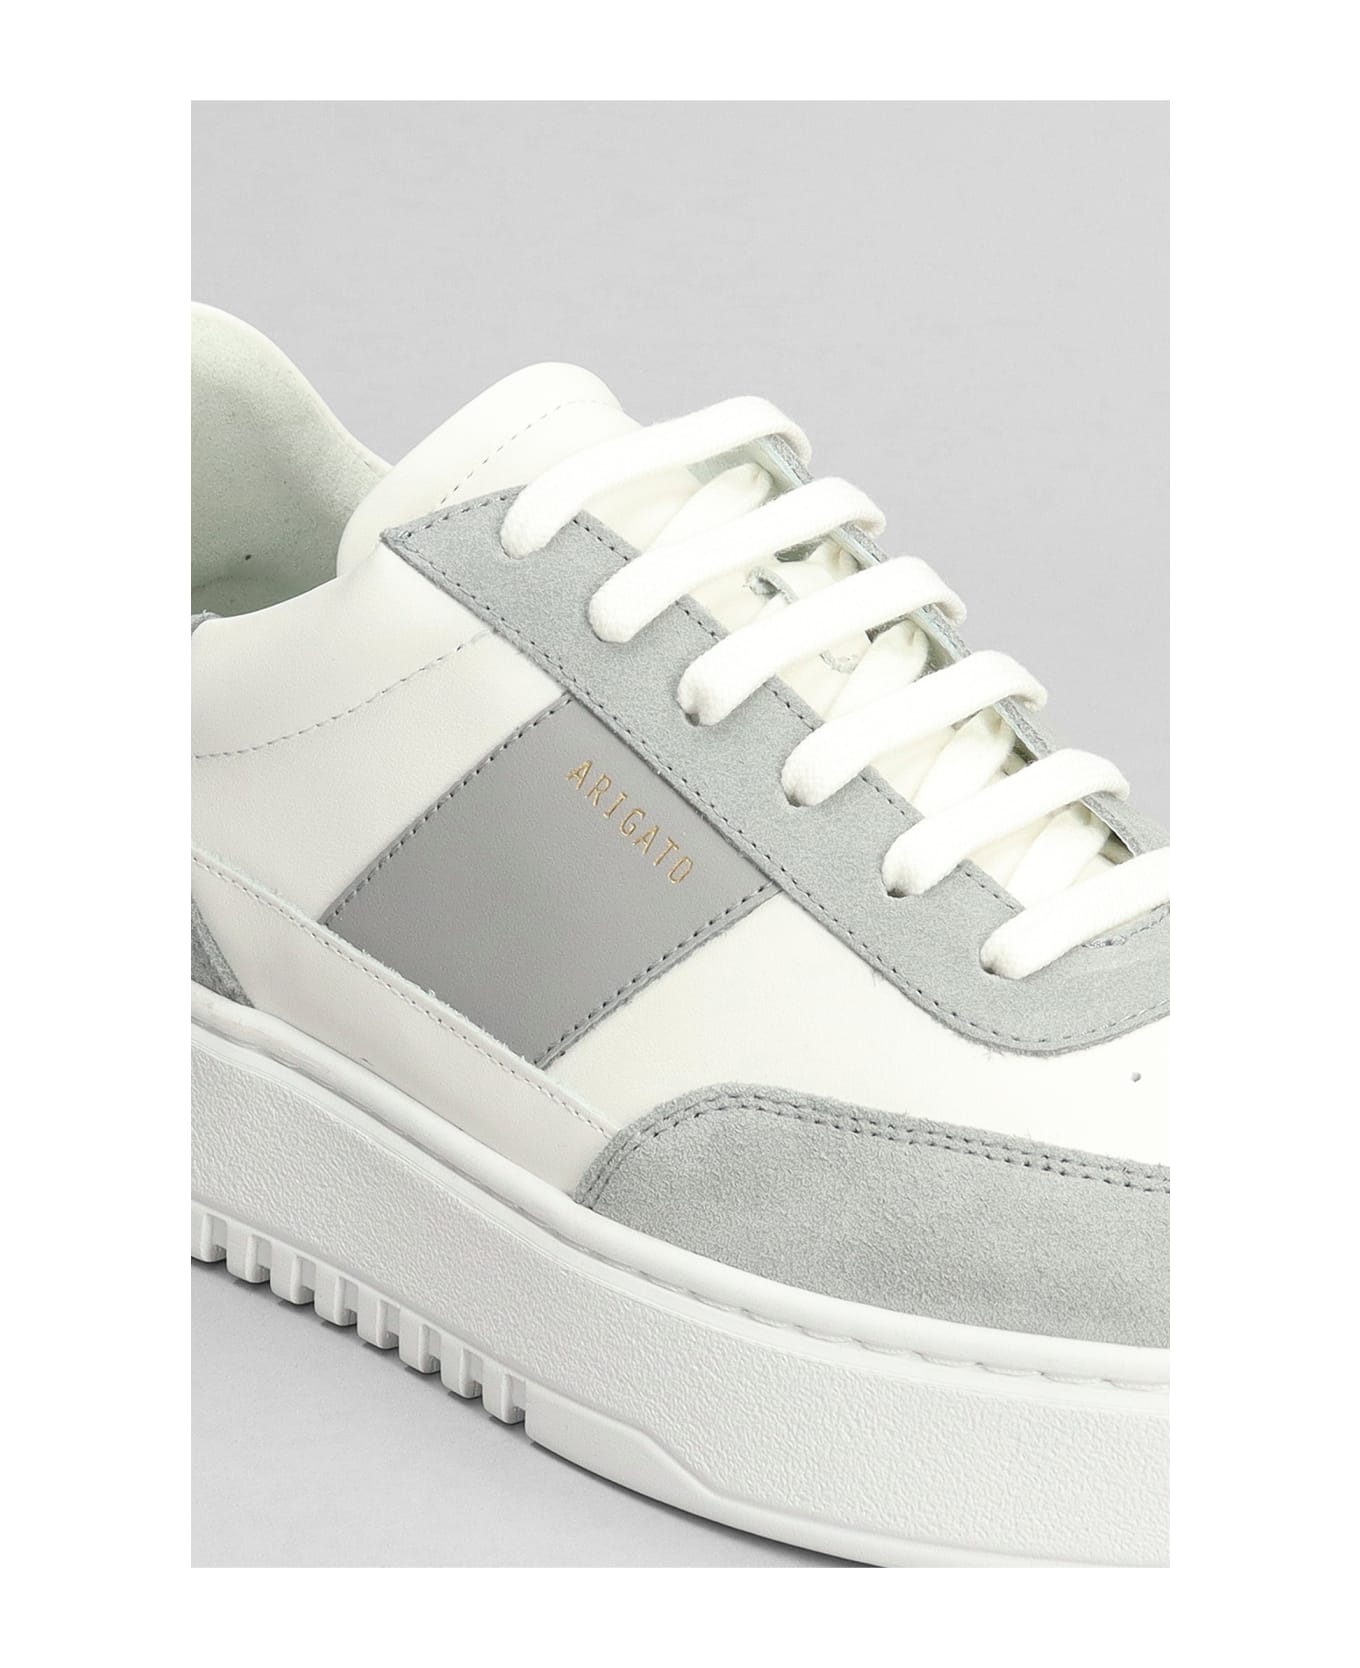 Axel Arigato Orbit Vintage Sneakers In Grey Suede And Leather - Grigio